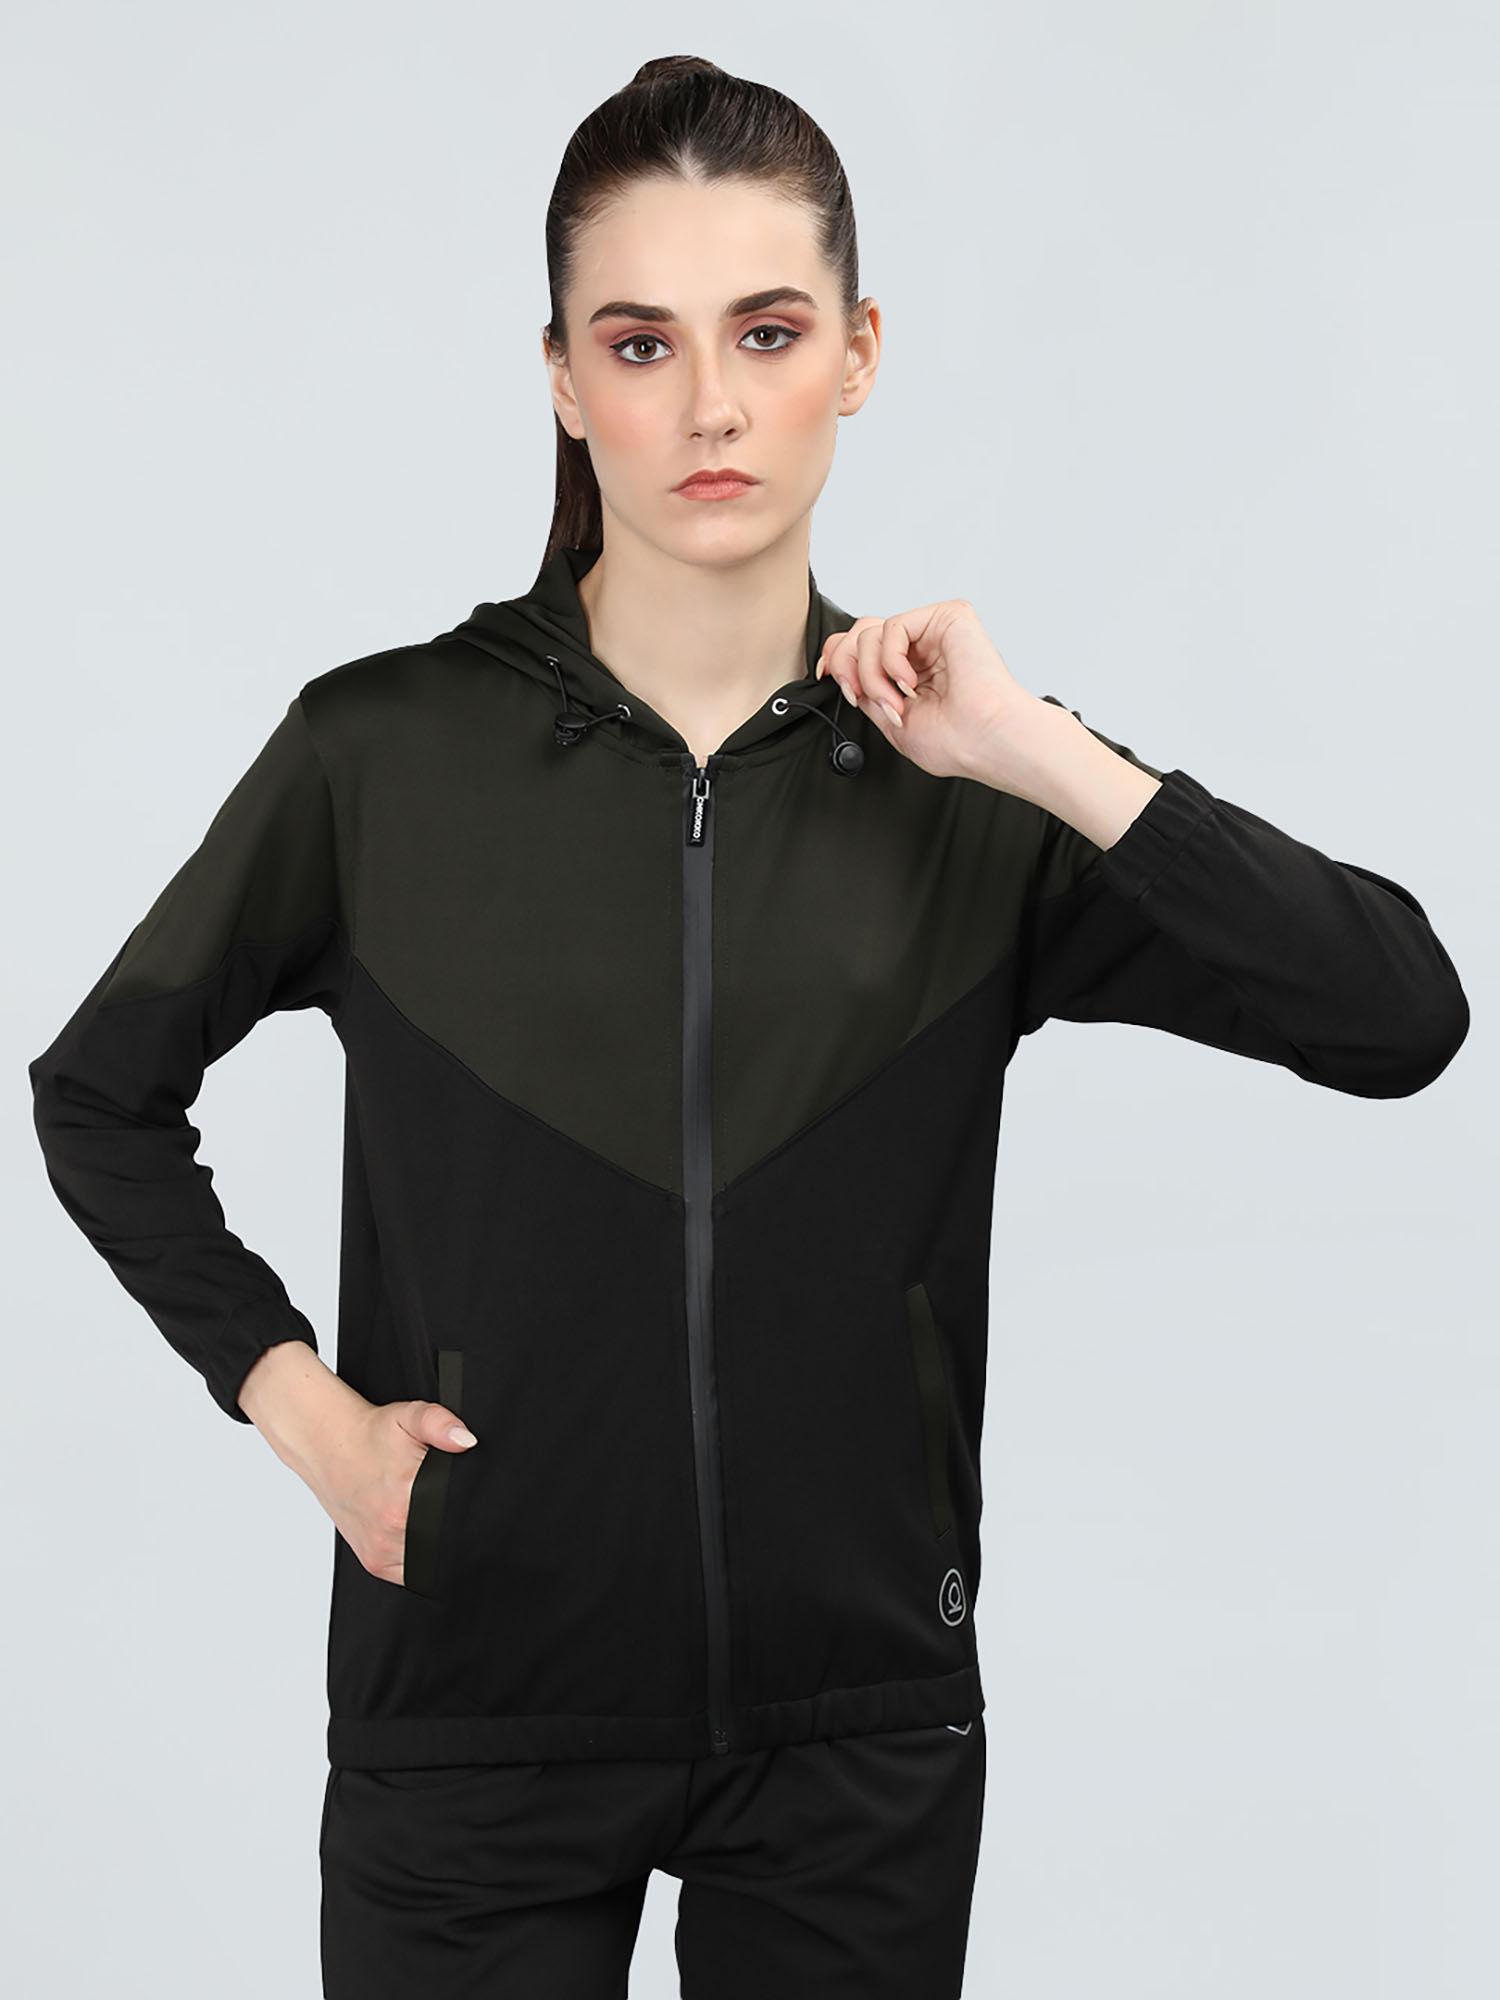 women-winter-sports-wind-cheater-zipper-stylish-jacket-olive